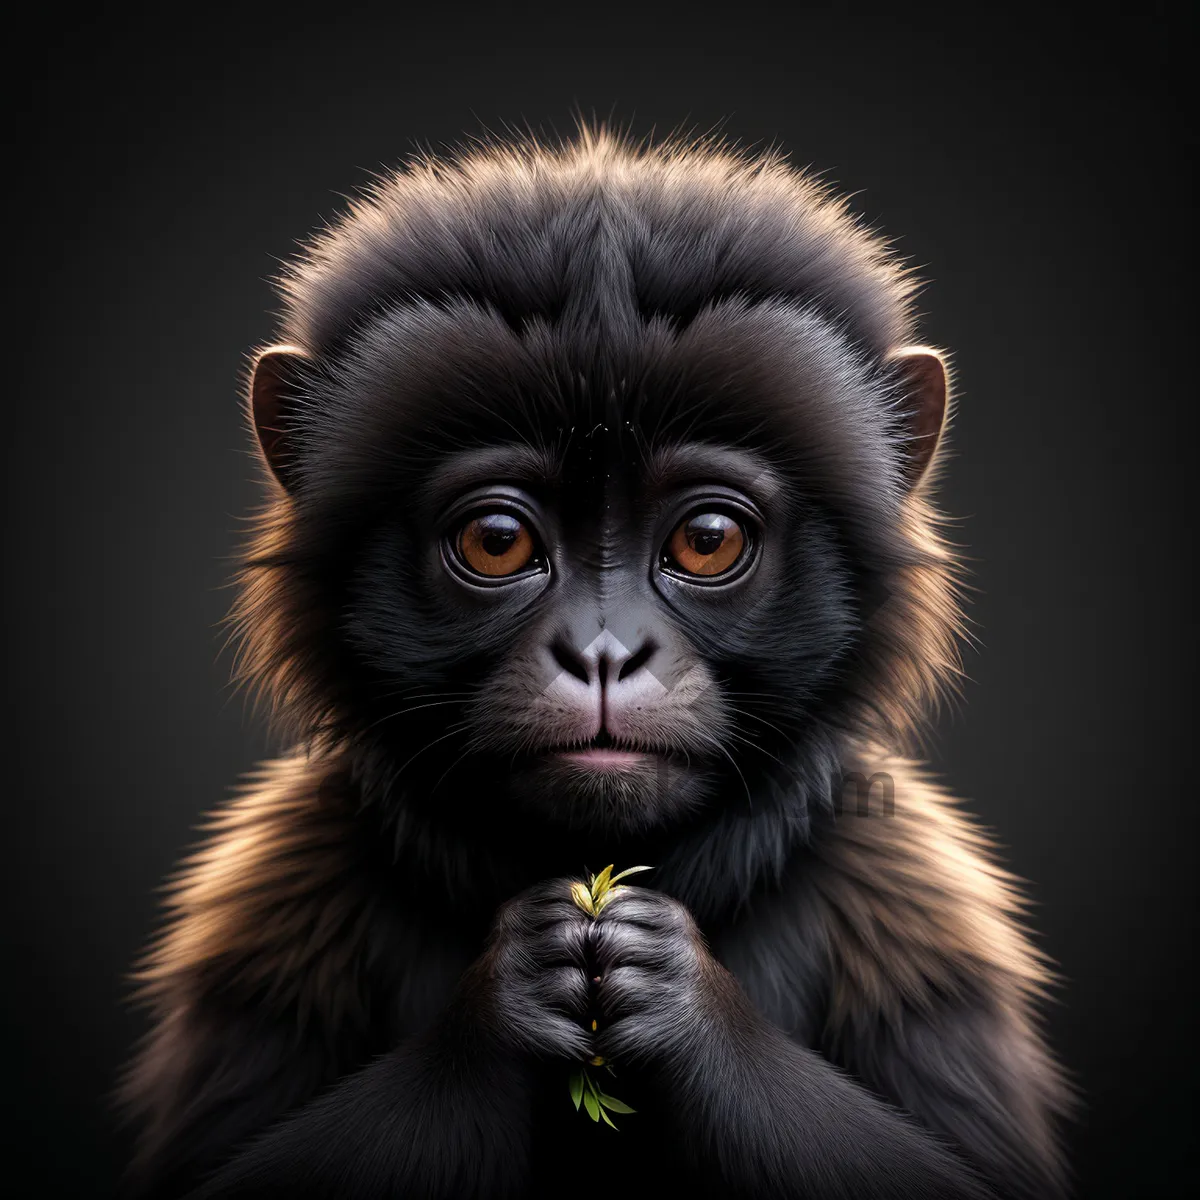 Picture of Baby Orangutan Portrait in the Wild